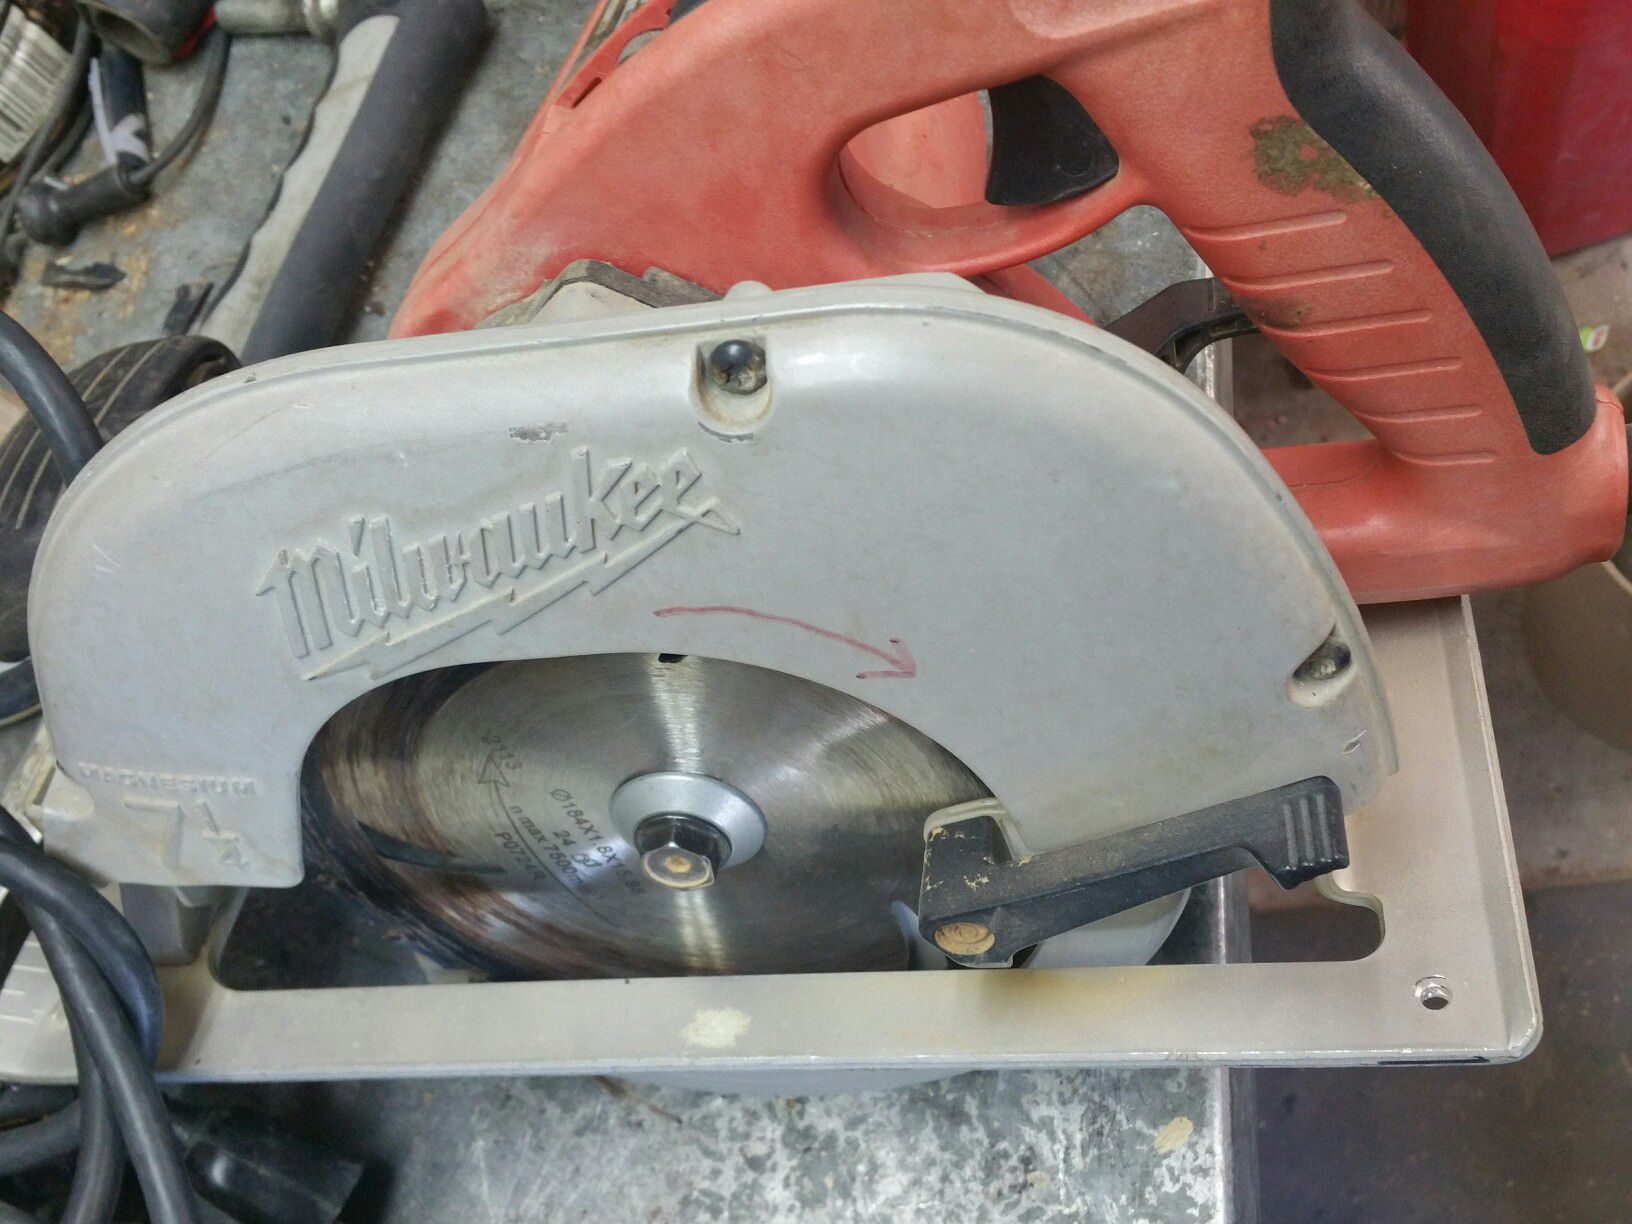 Milwaukee tilt lock circular saw model 6391